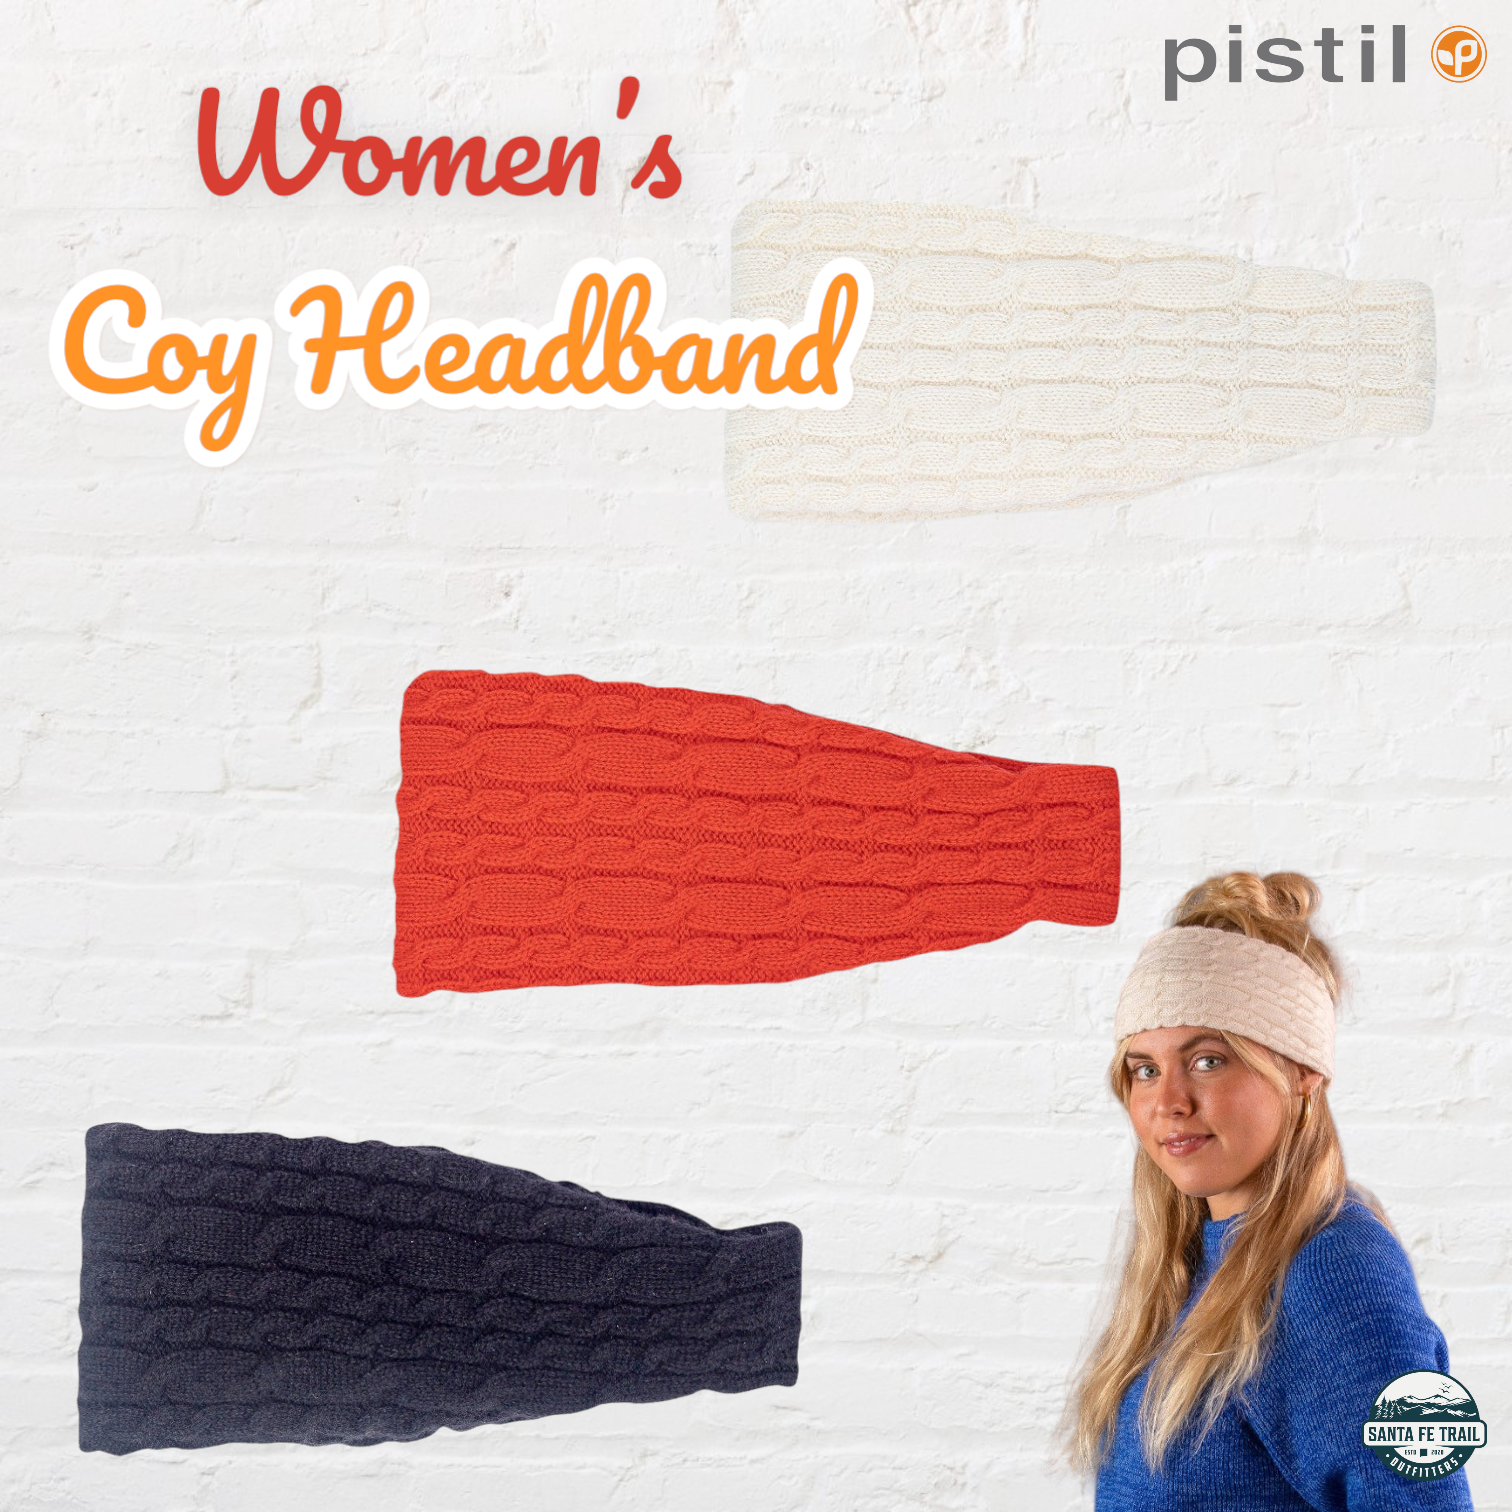 Coy Headband by Pistil Designs